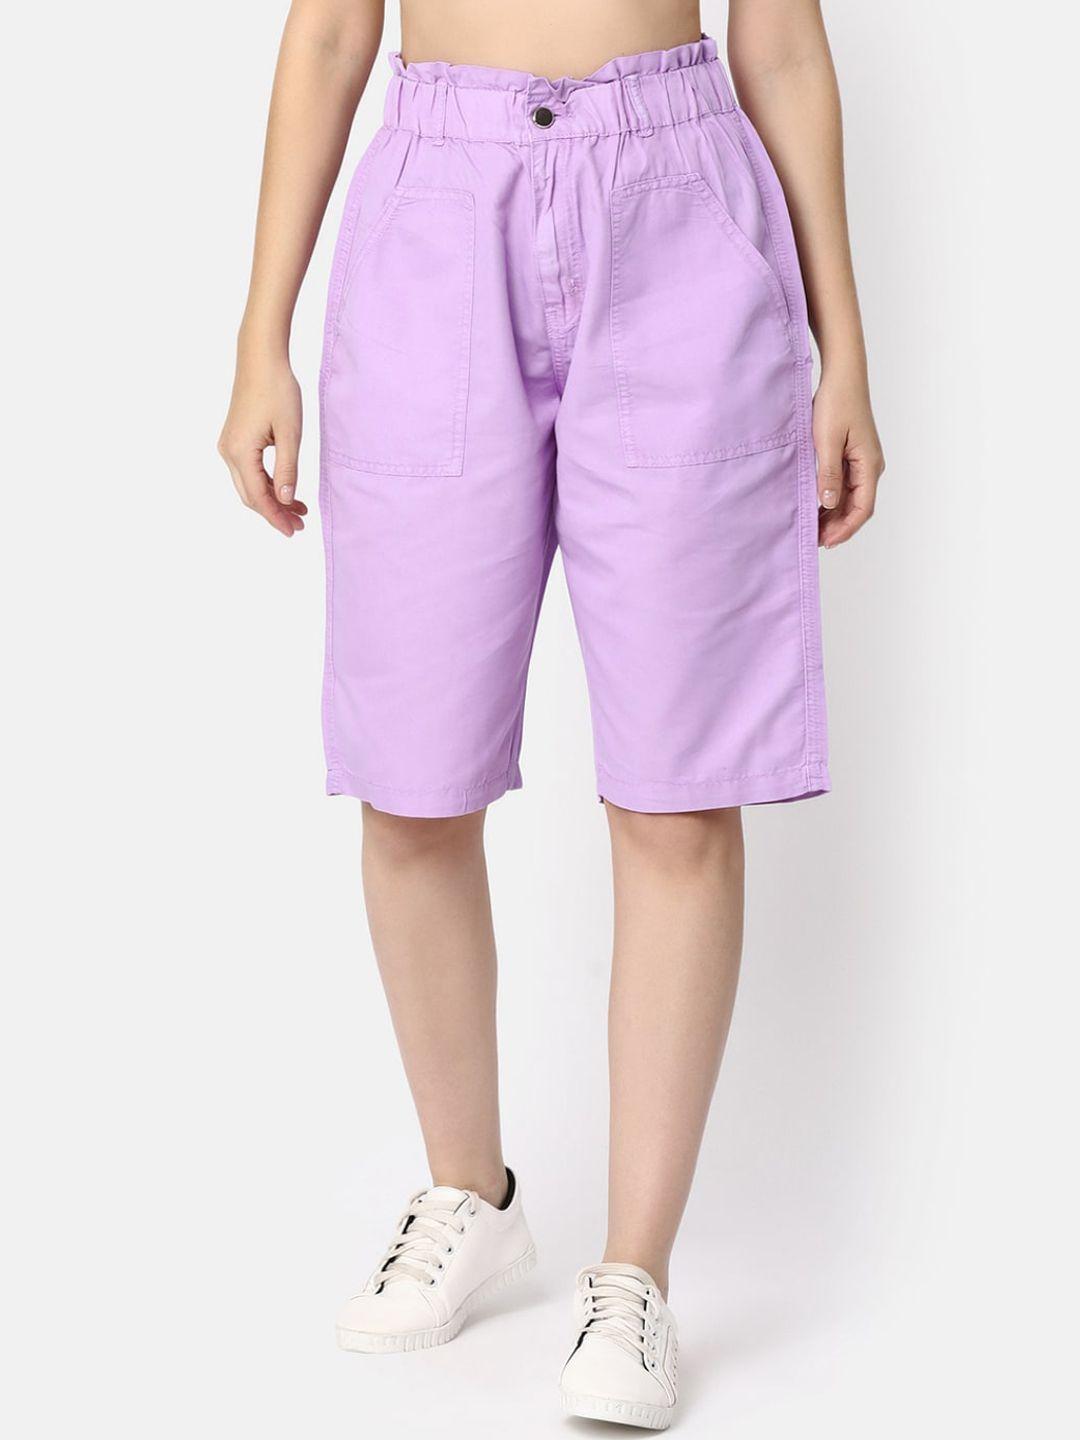 v-mart women mid-rise casual cotton shorts